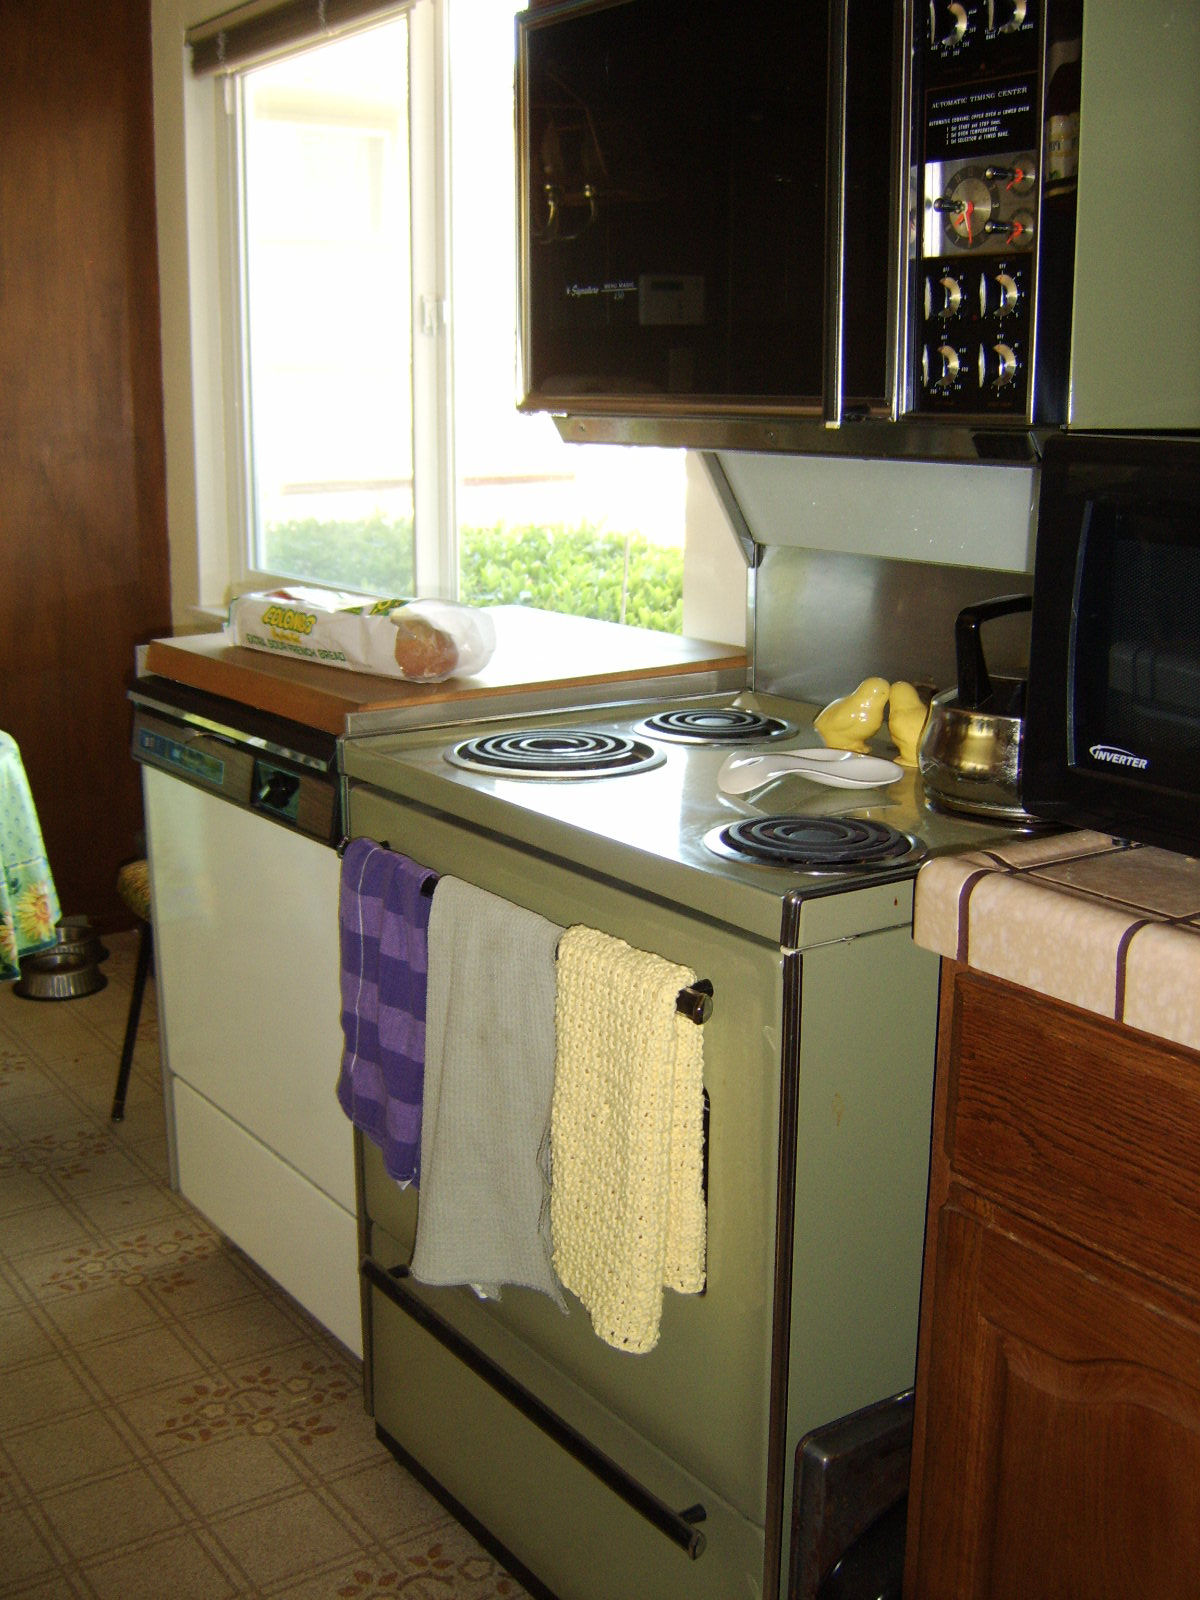 [dishwasher+stove+yellow+towel.jpg]